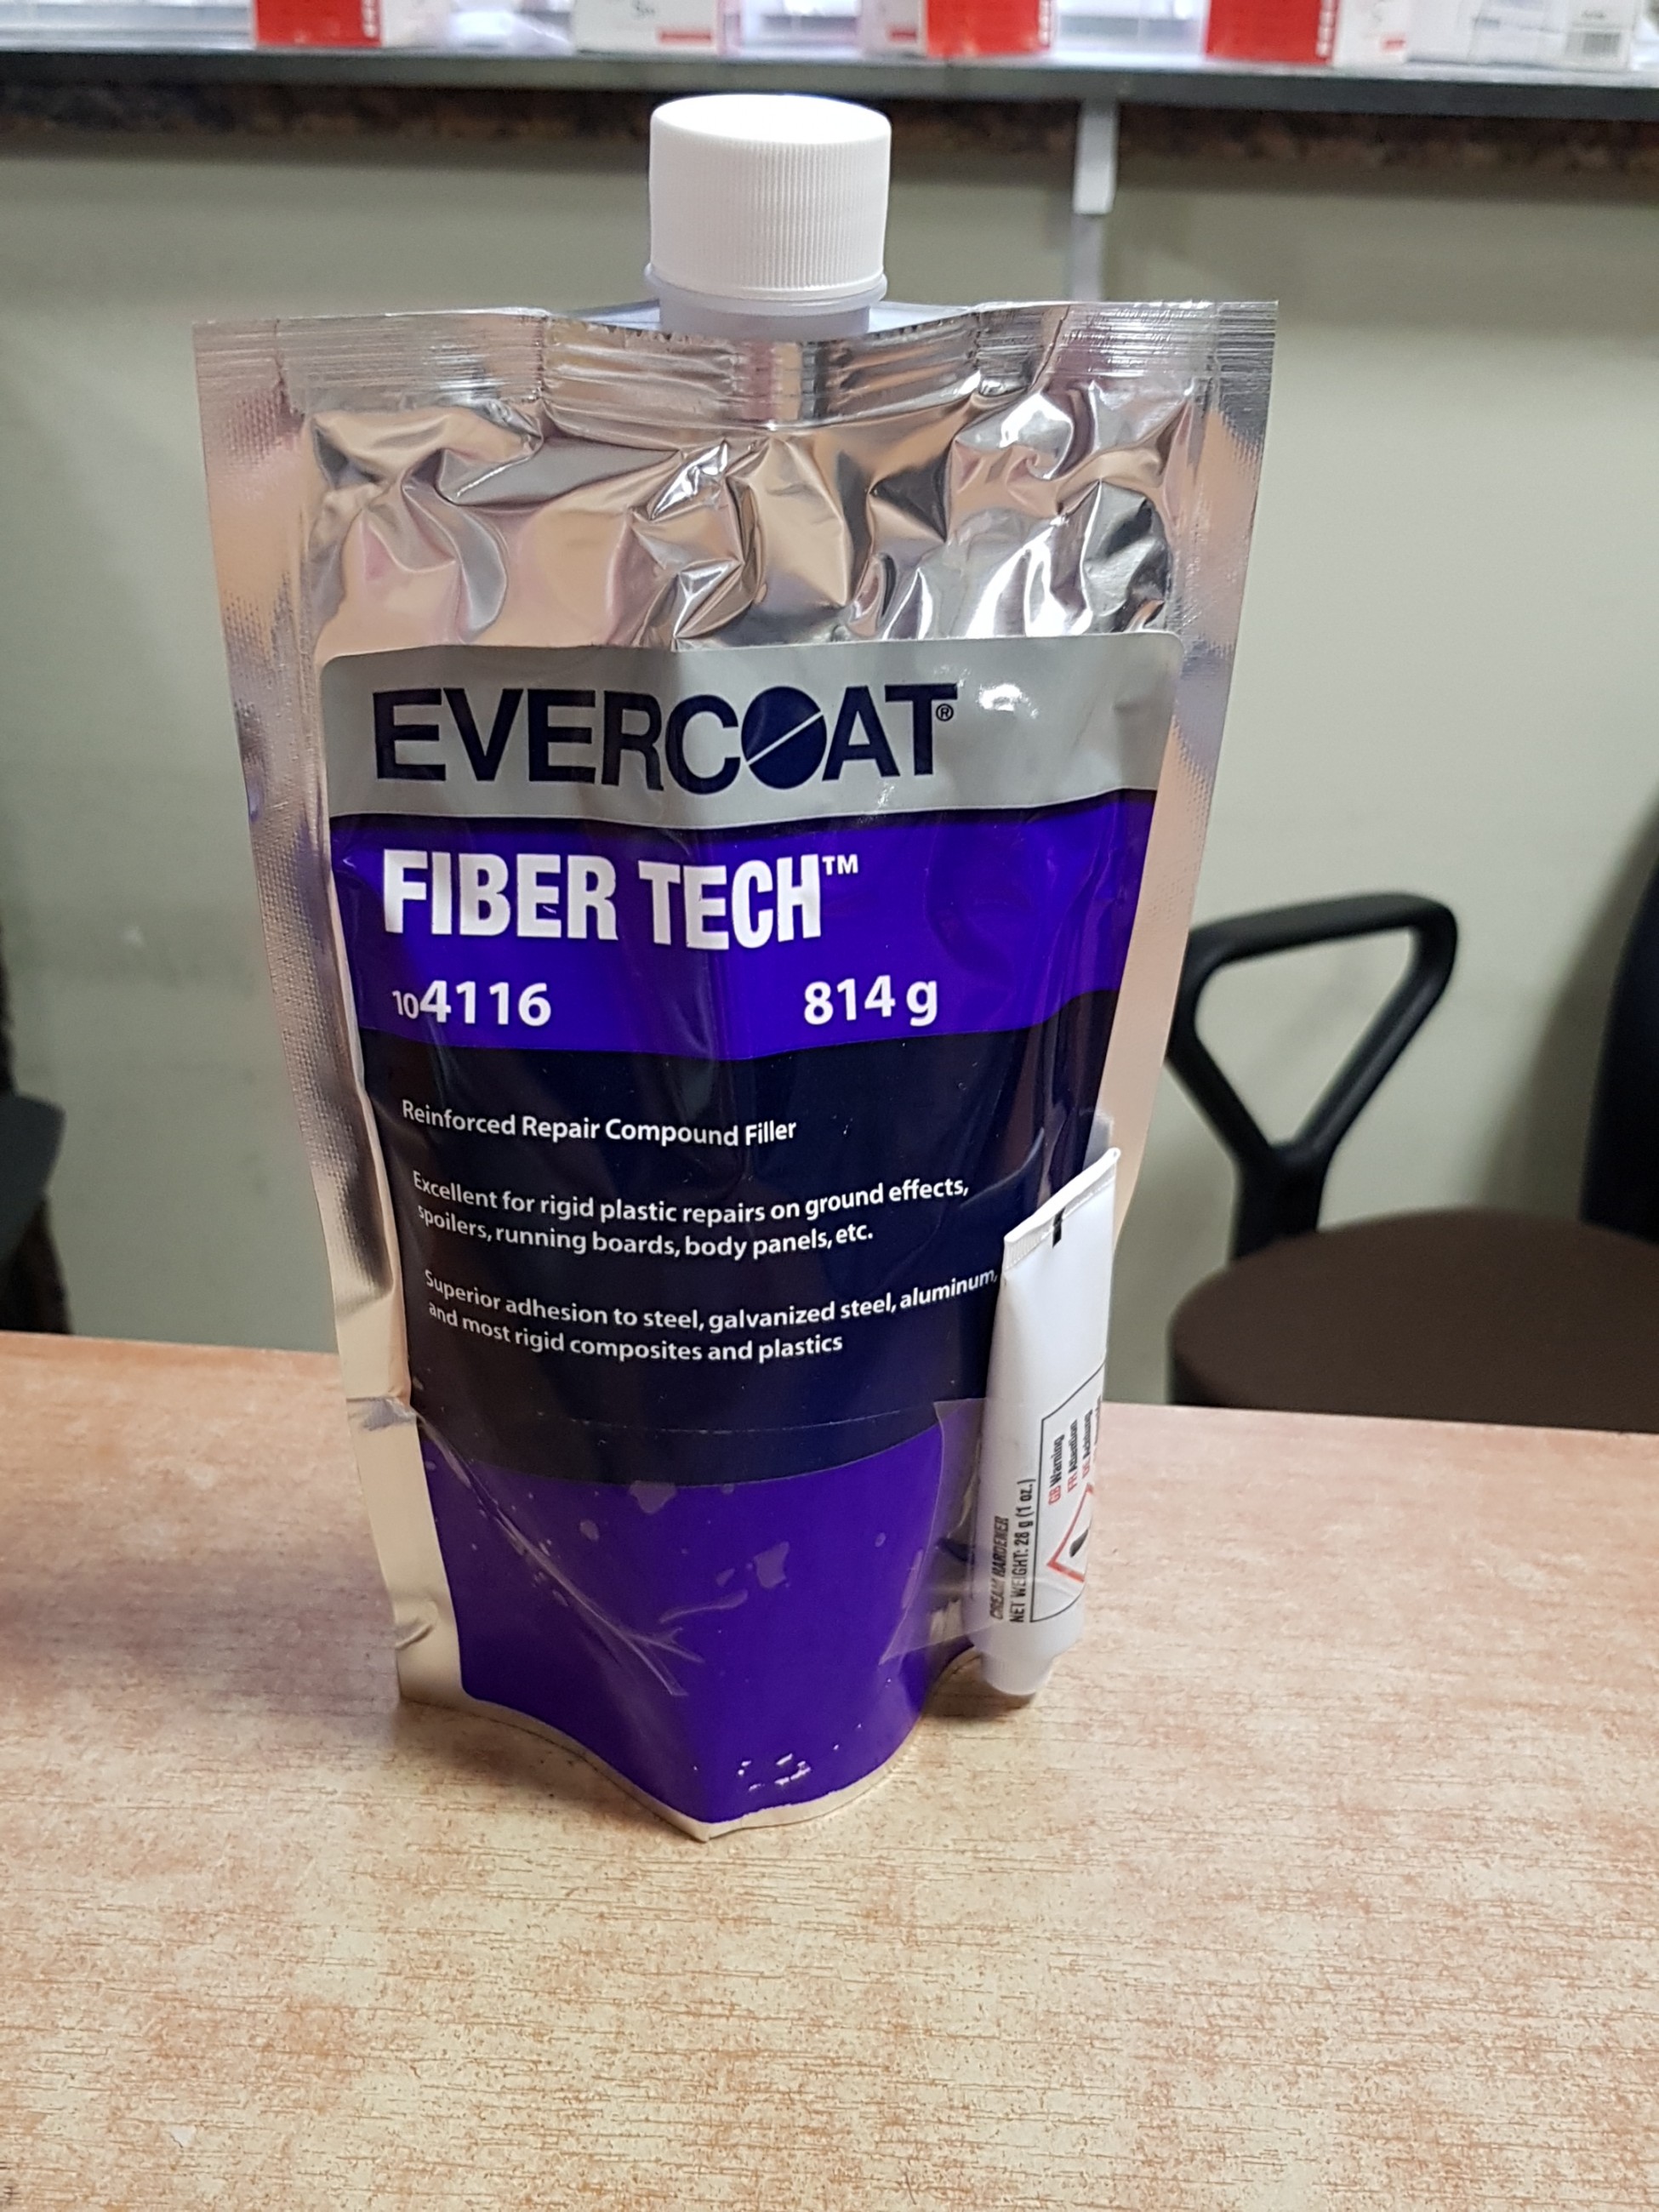 Evercoat Fiber Tech